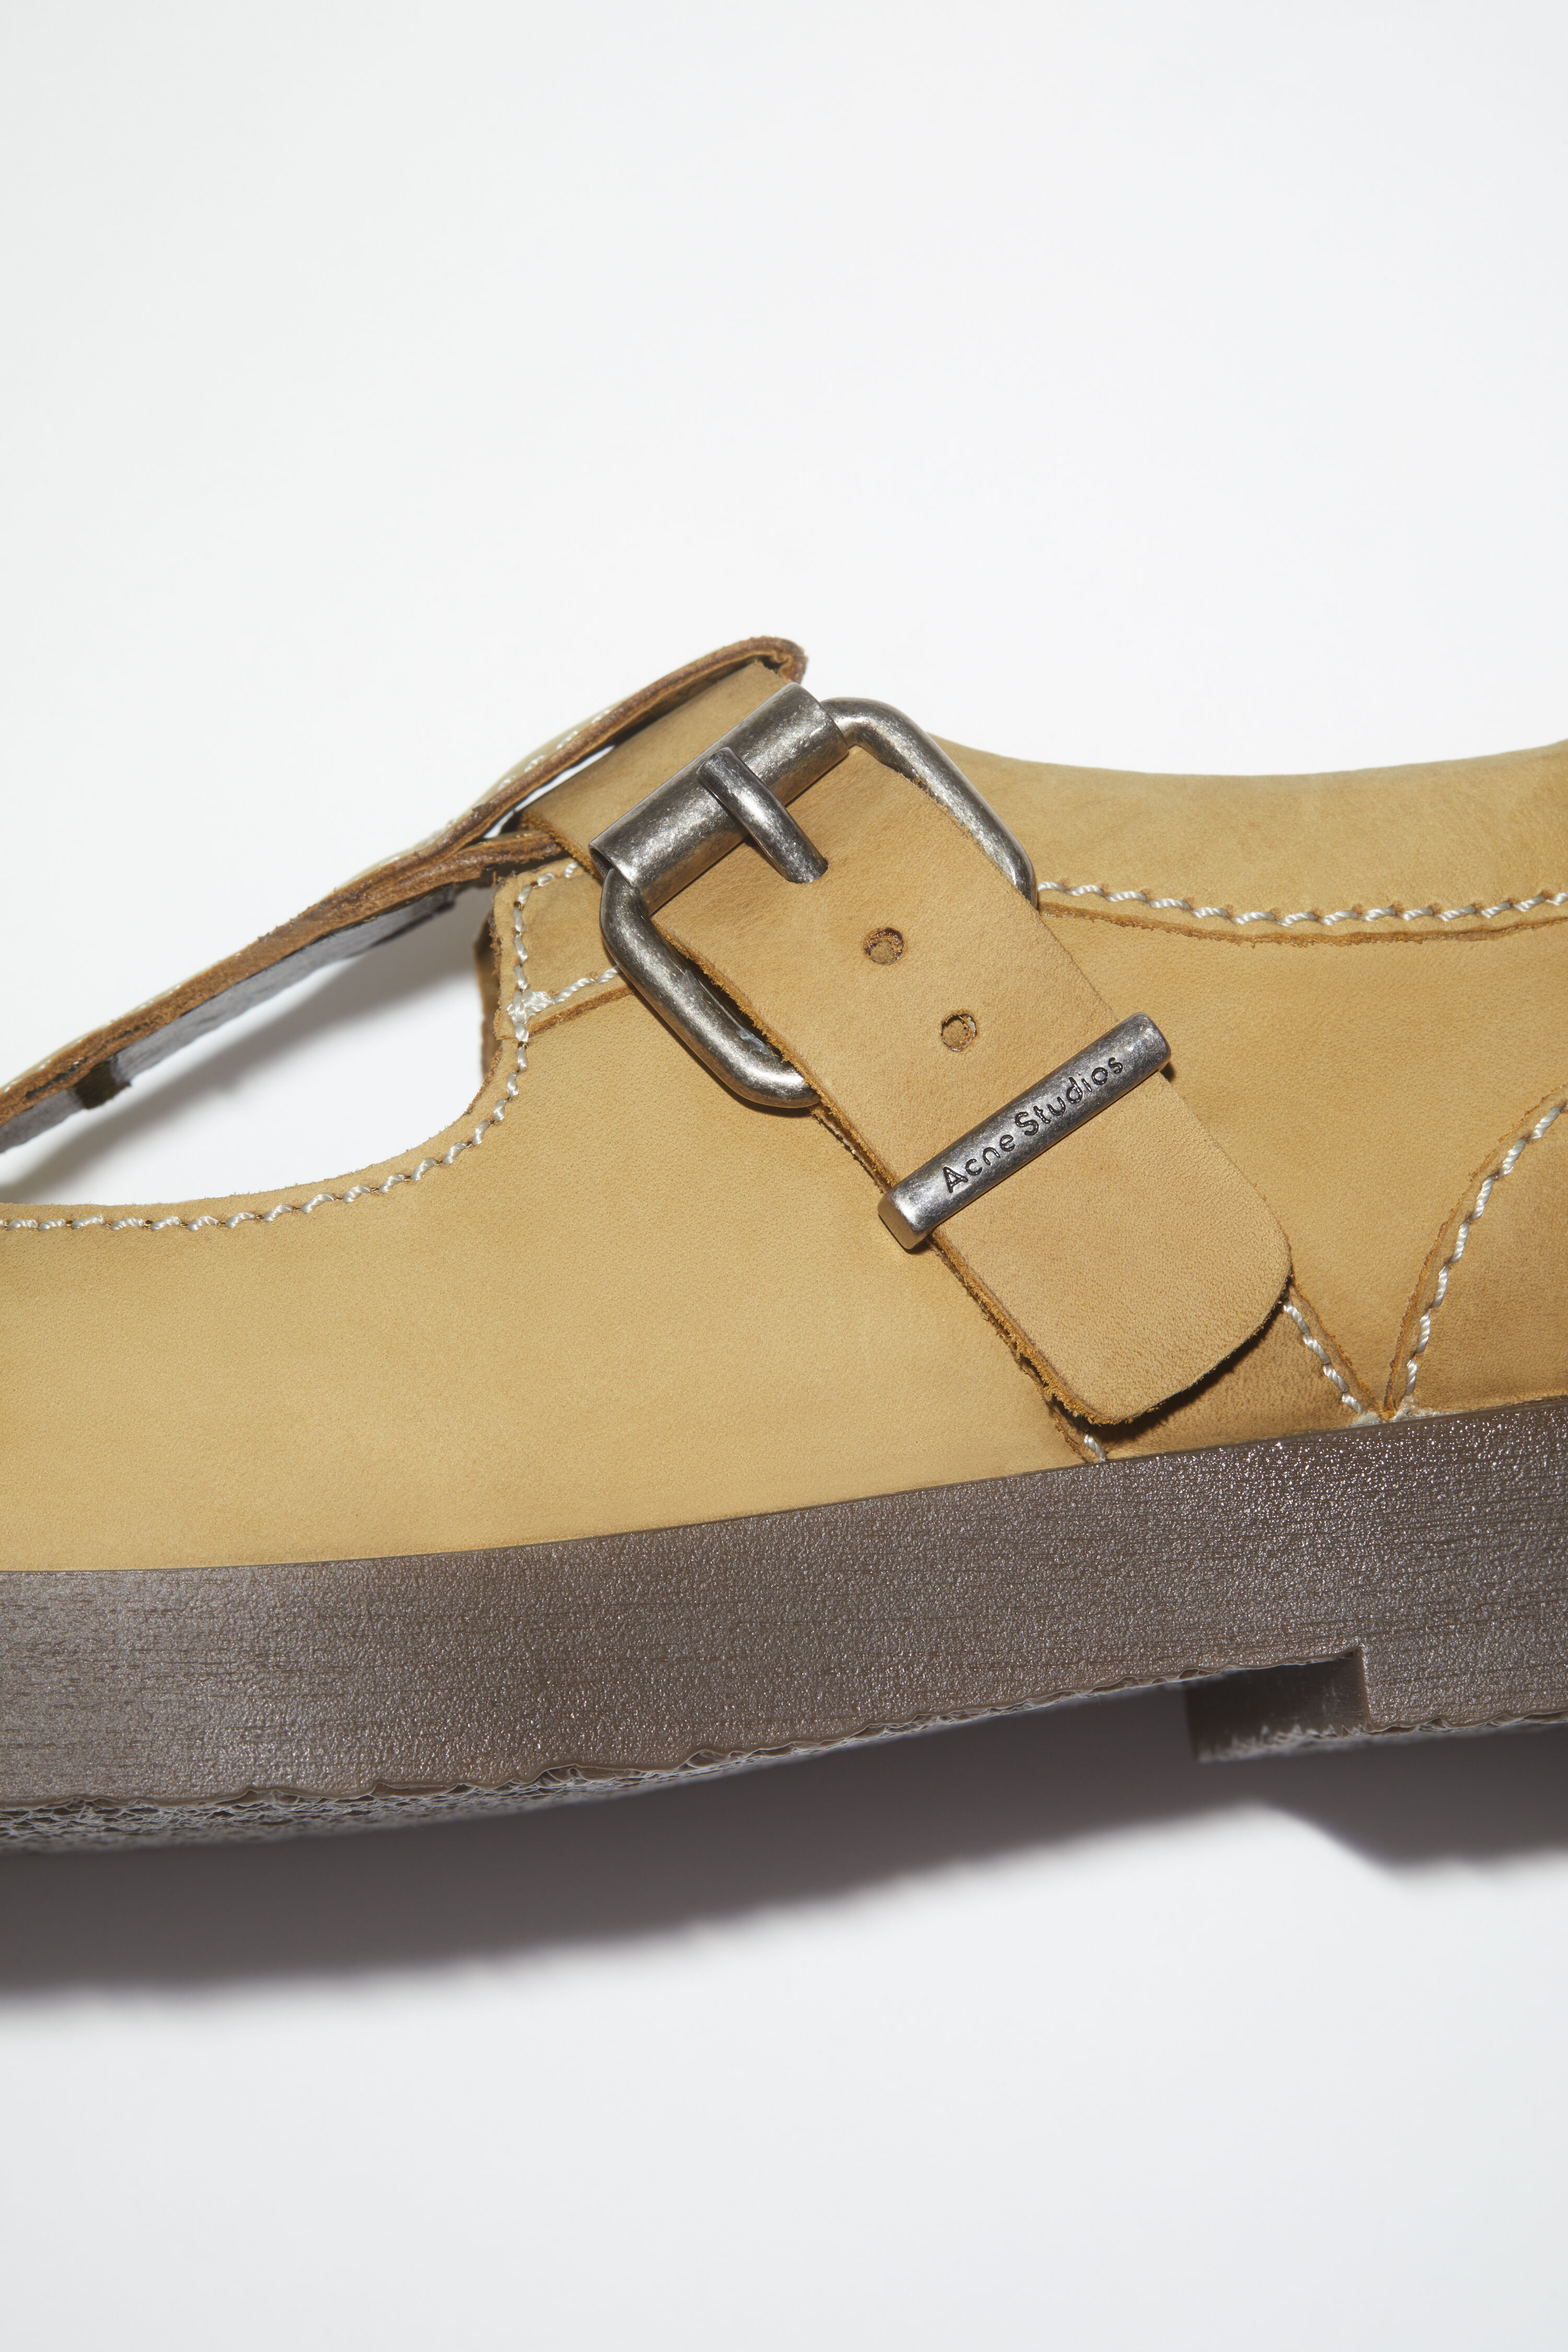 Acne Studios - Leather buckle shoes - Khaki beige